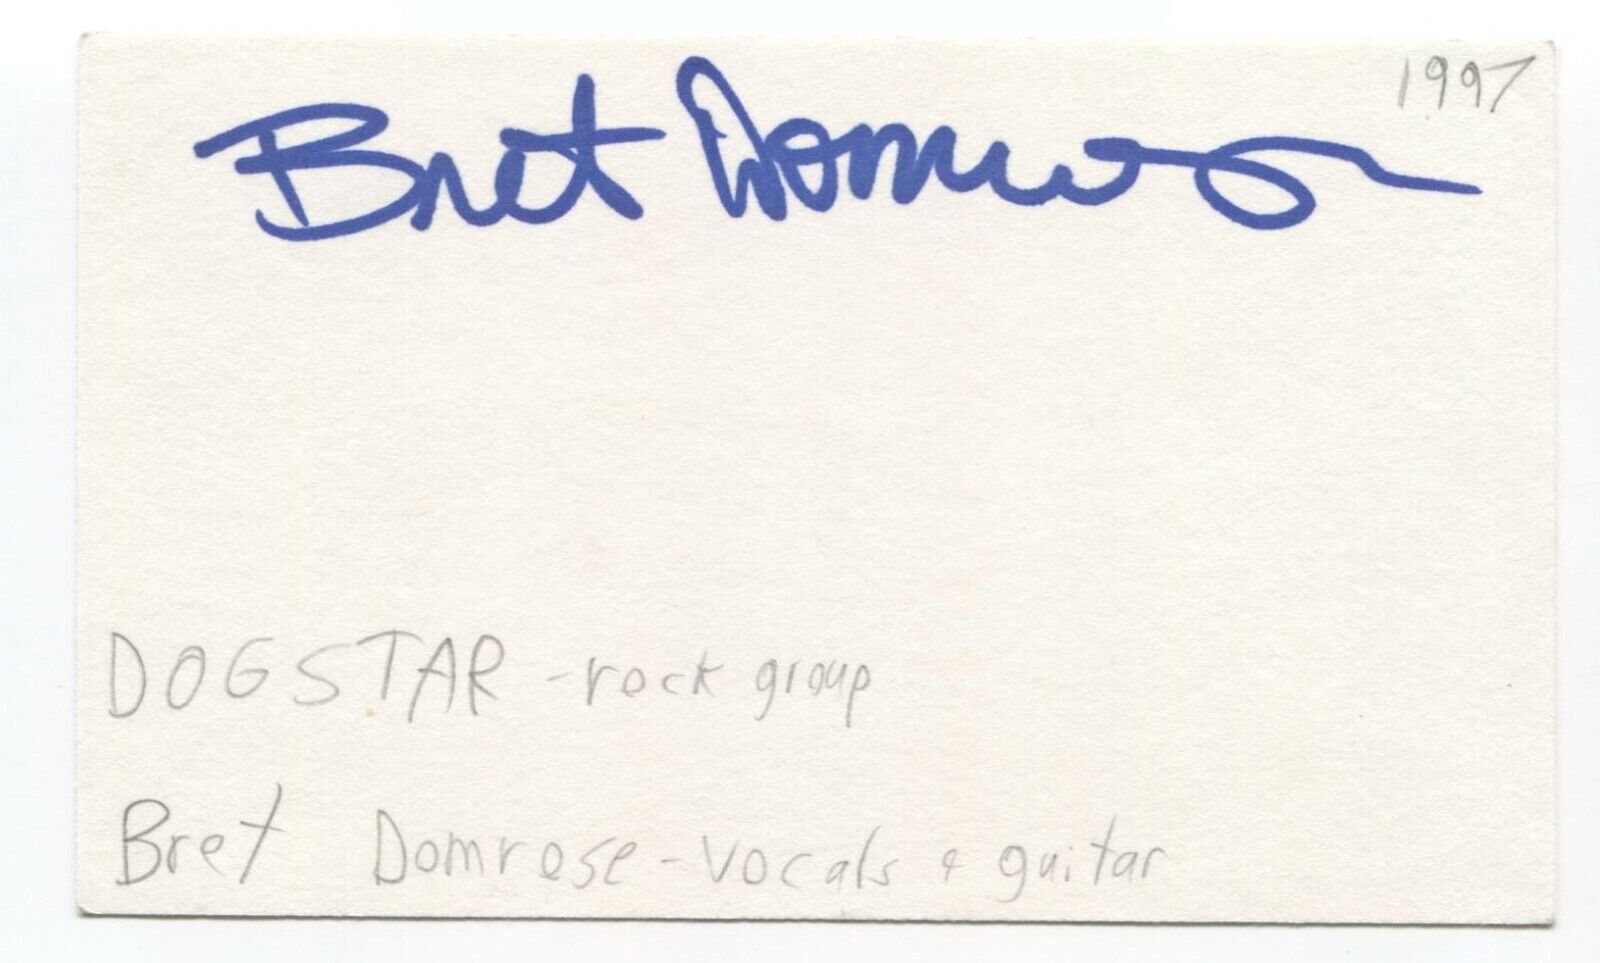 Dogstar - Bret Domrose Signed Choice Card Signatu 55% OFF Autographed 3x5 Index